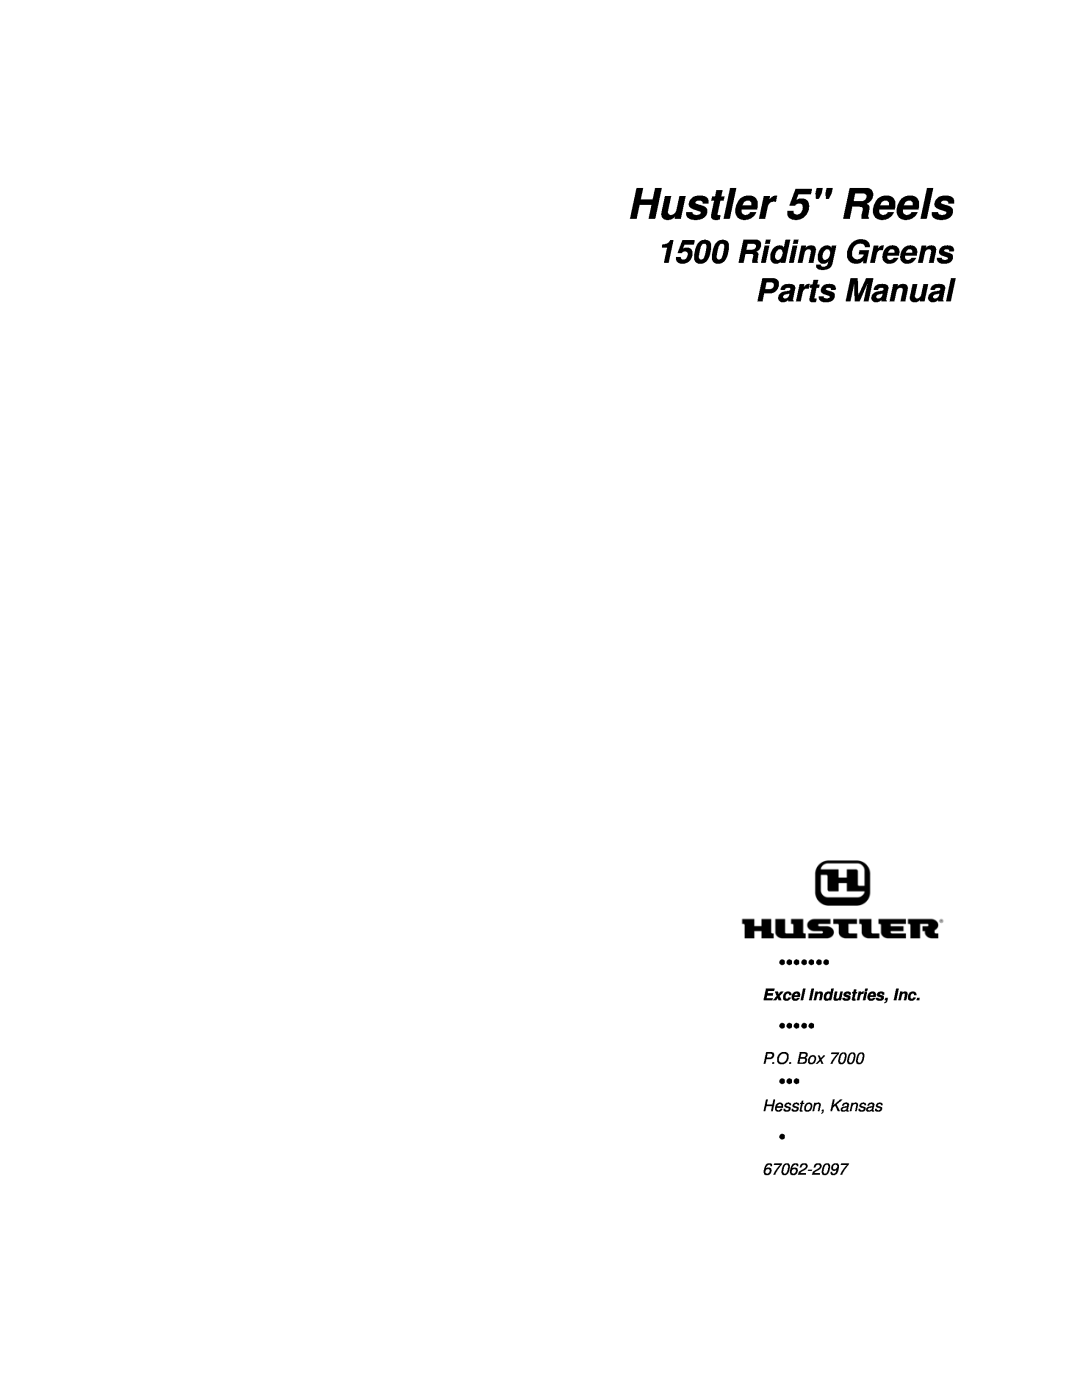 Hustler Turf 114675_0311 C-1 manual Riding Greens Parts Manual, Hustler 5 Reels, Excel Industries, Inc, P.O. Box 